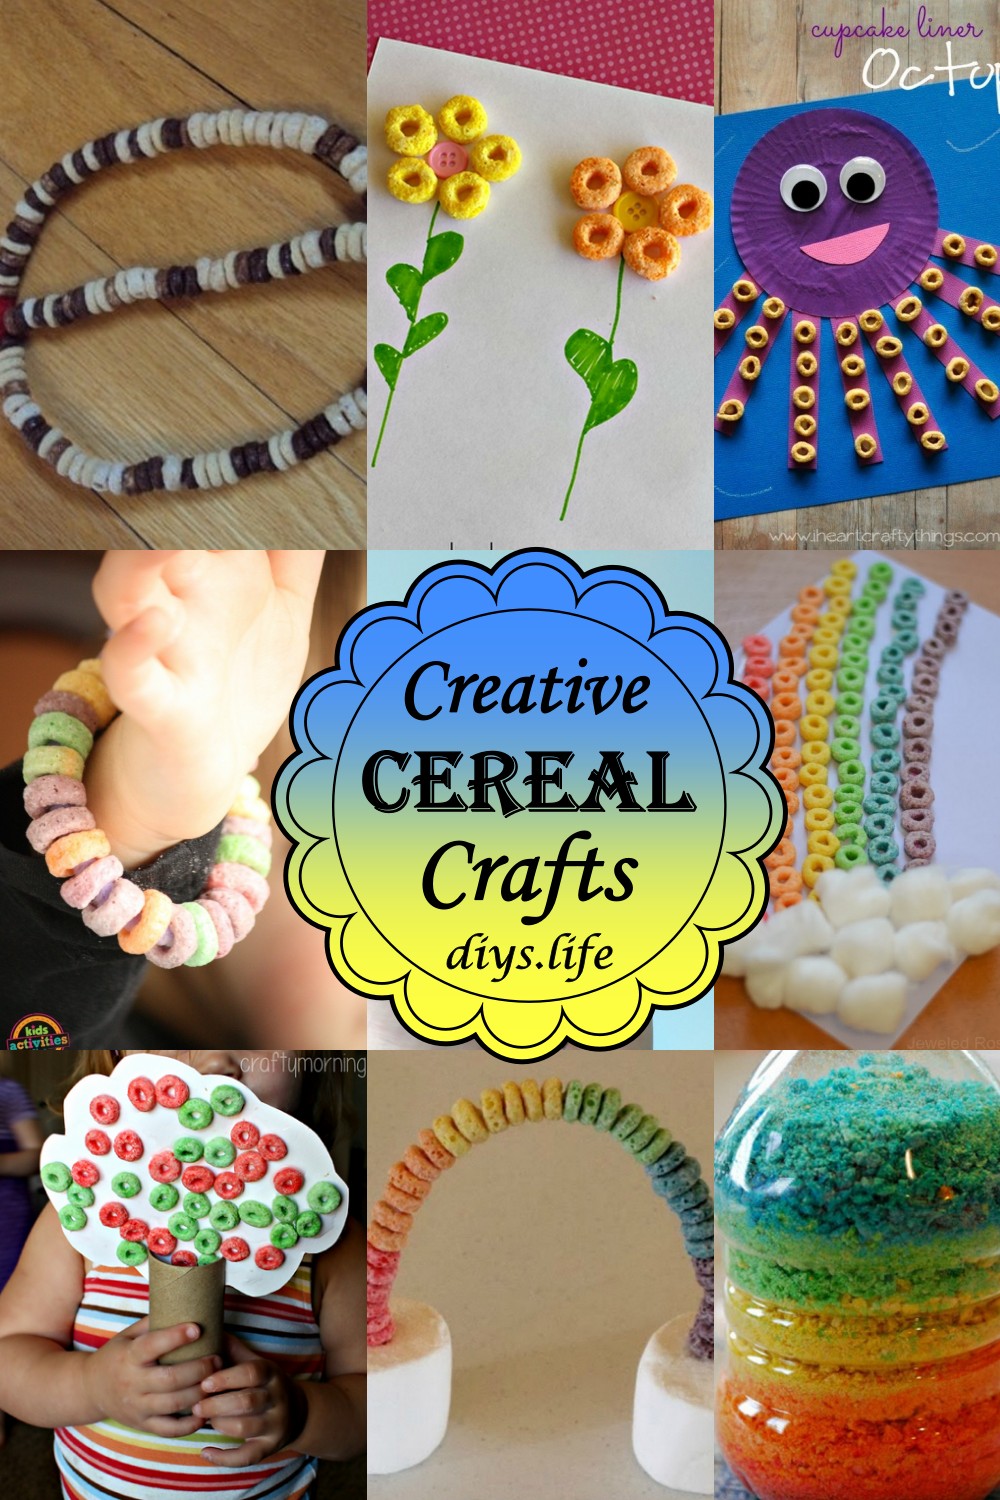 Creative Cereal Crafts